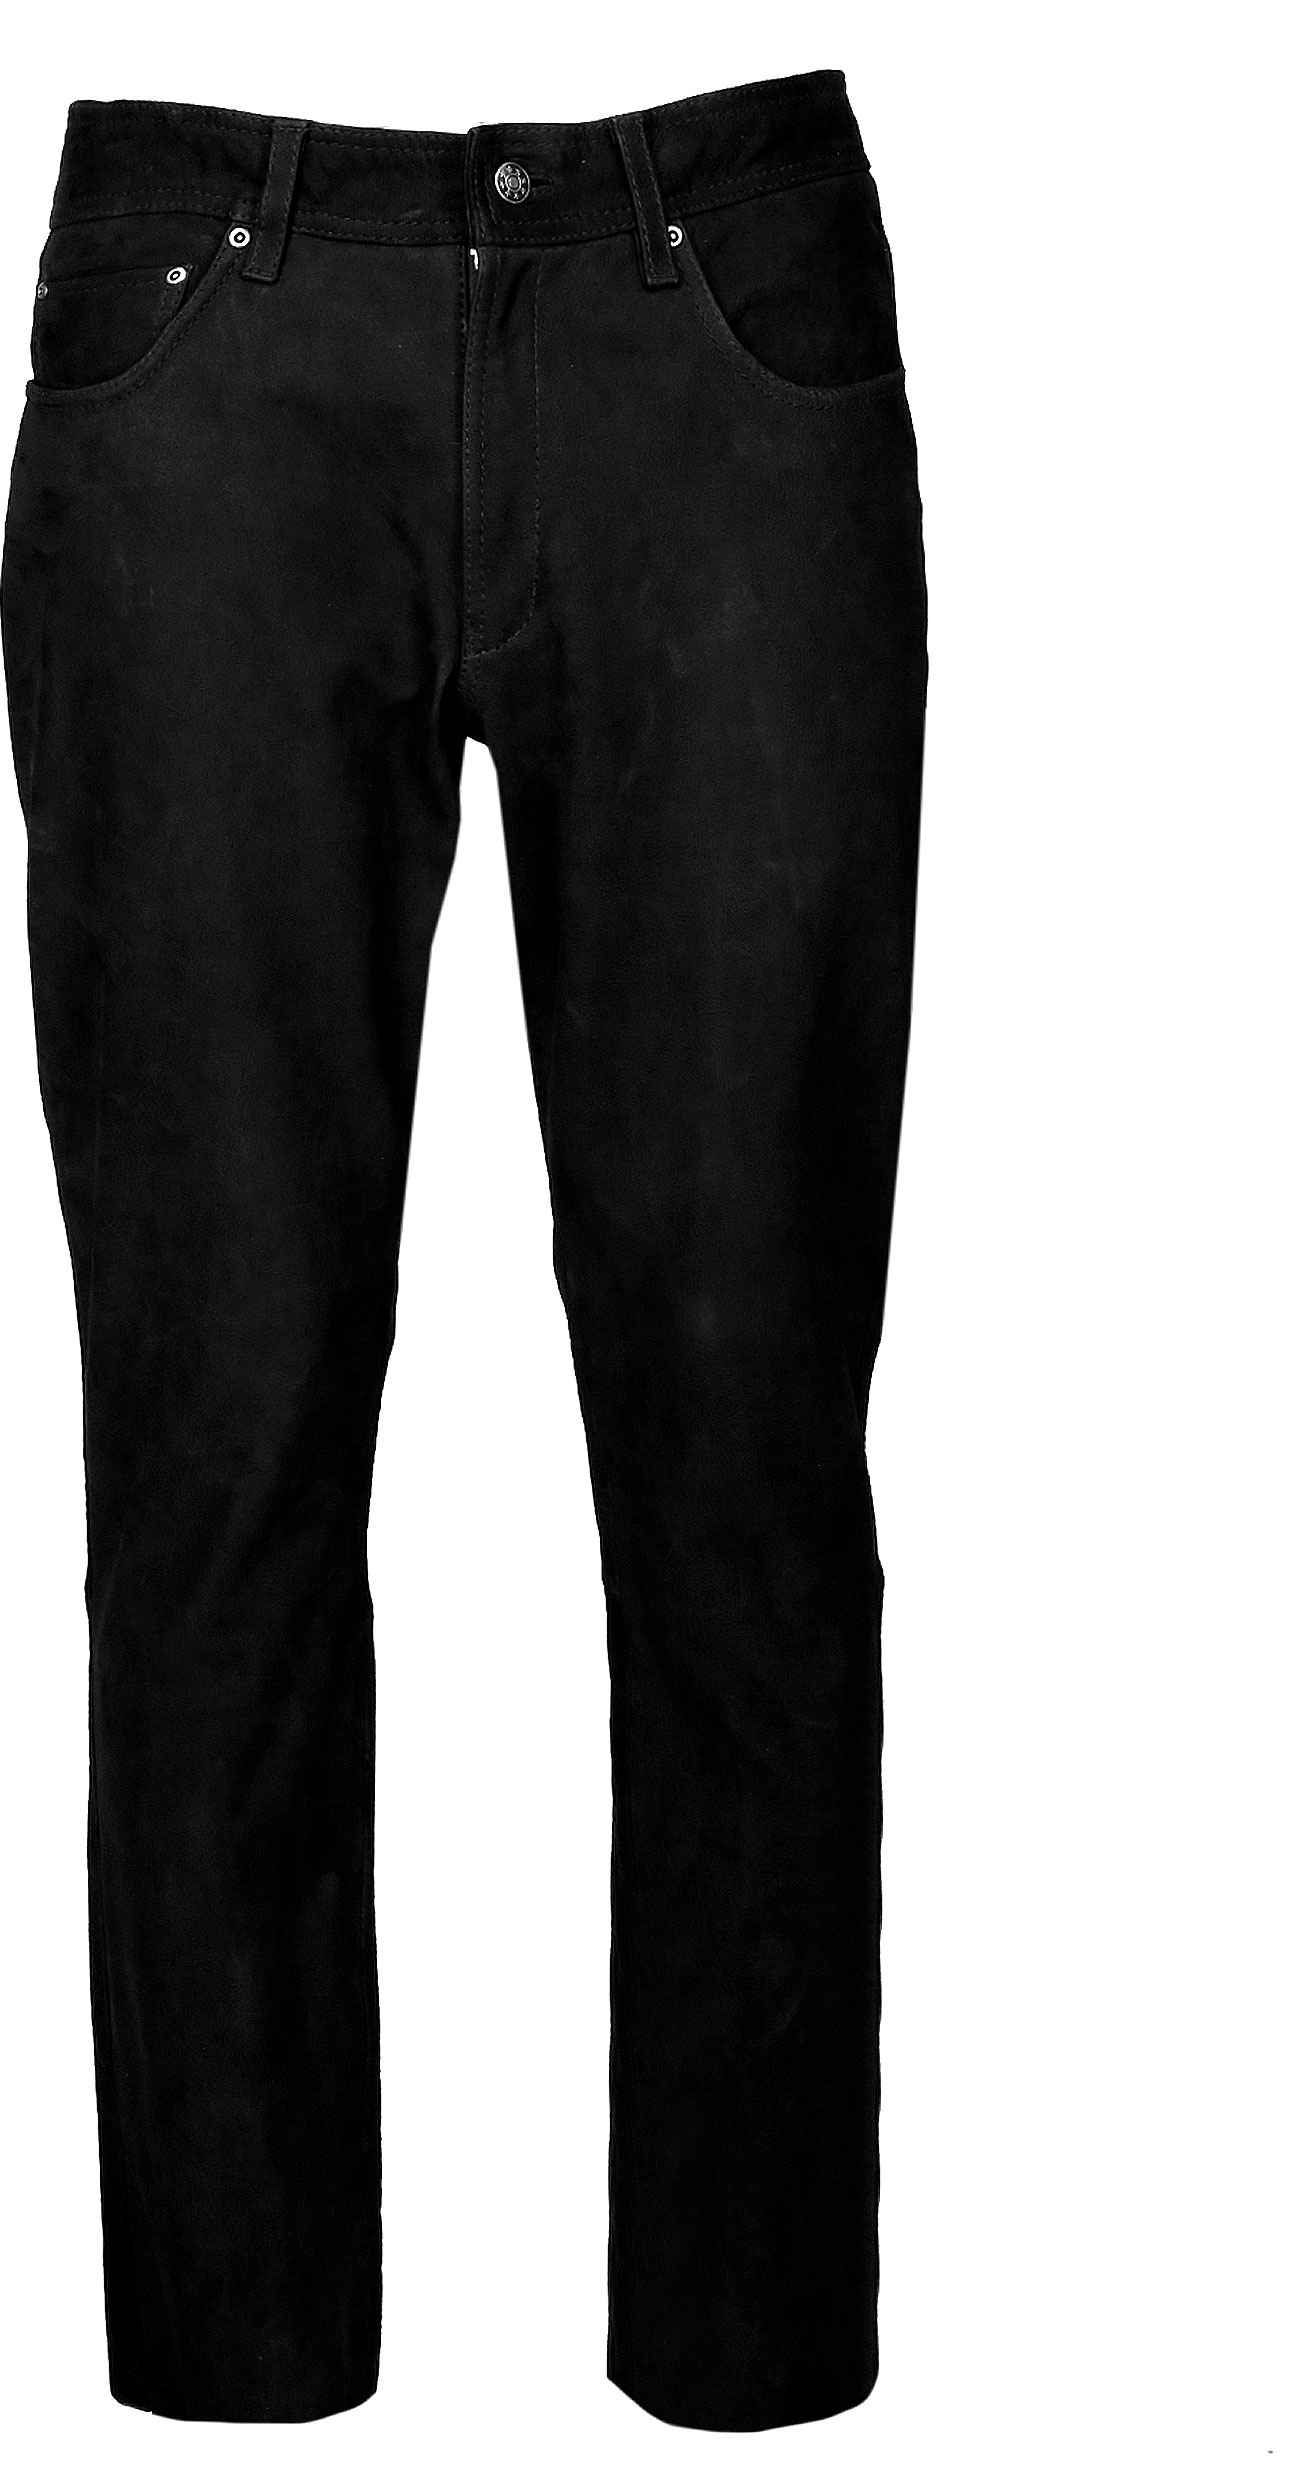 JCC Phill, pantalon en cuir - Noir - 56